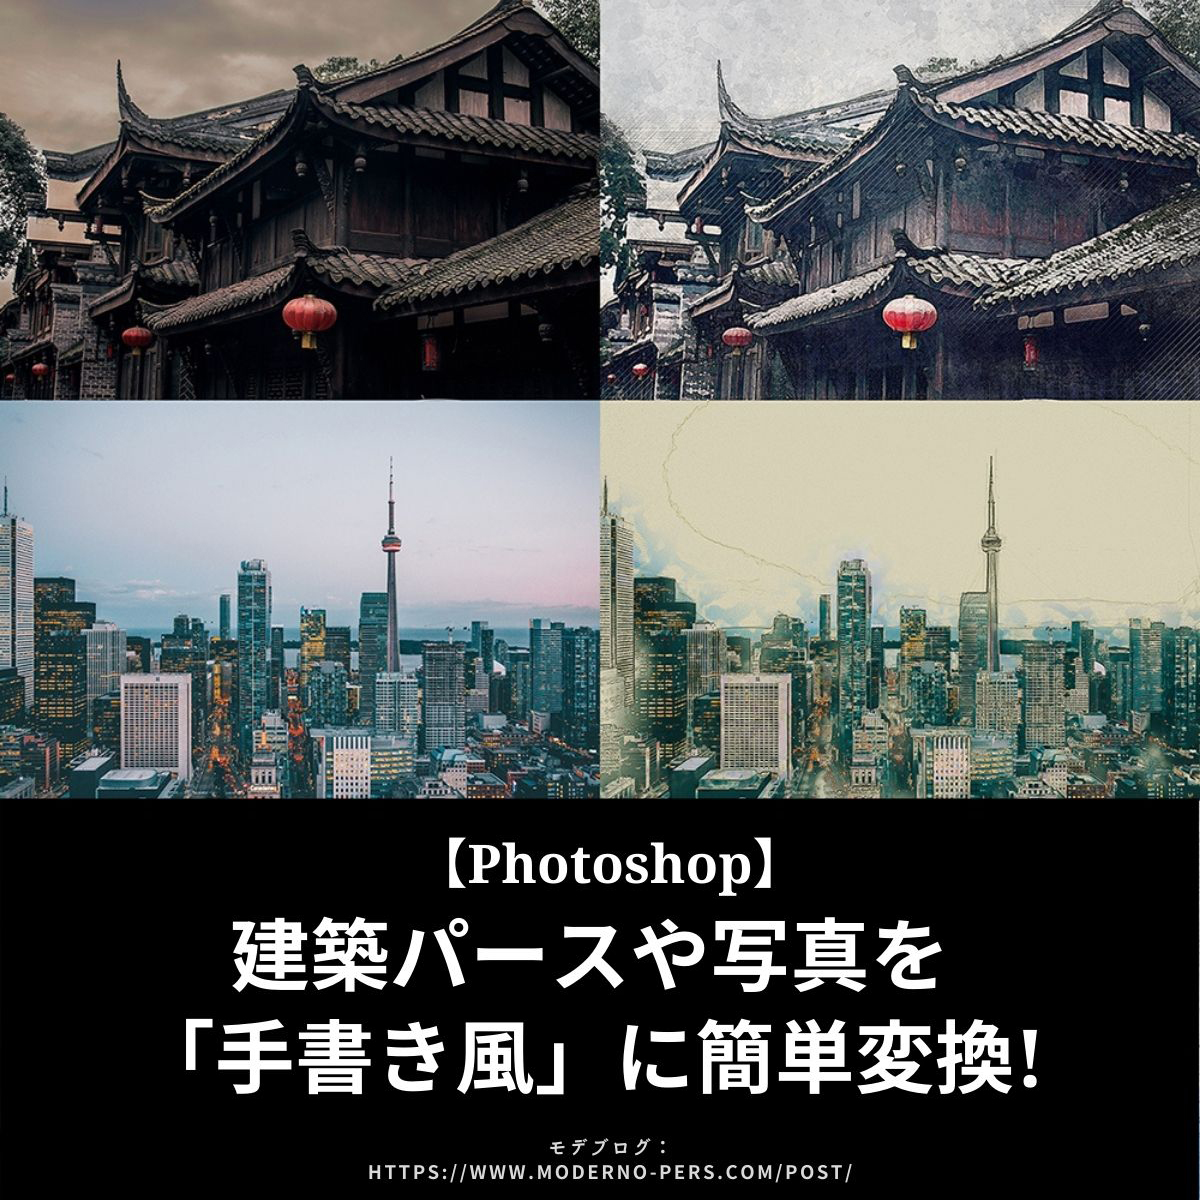 【Photoshop】建築パースや写真を「手書き風」に簡単変換!